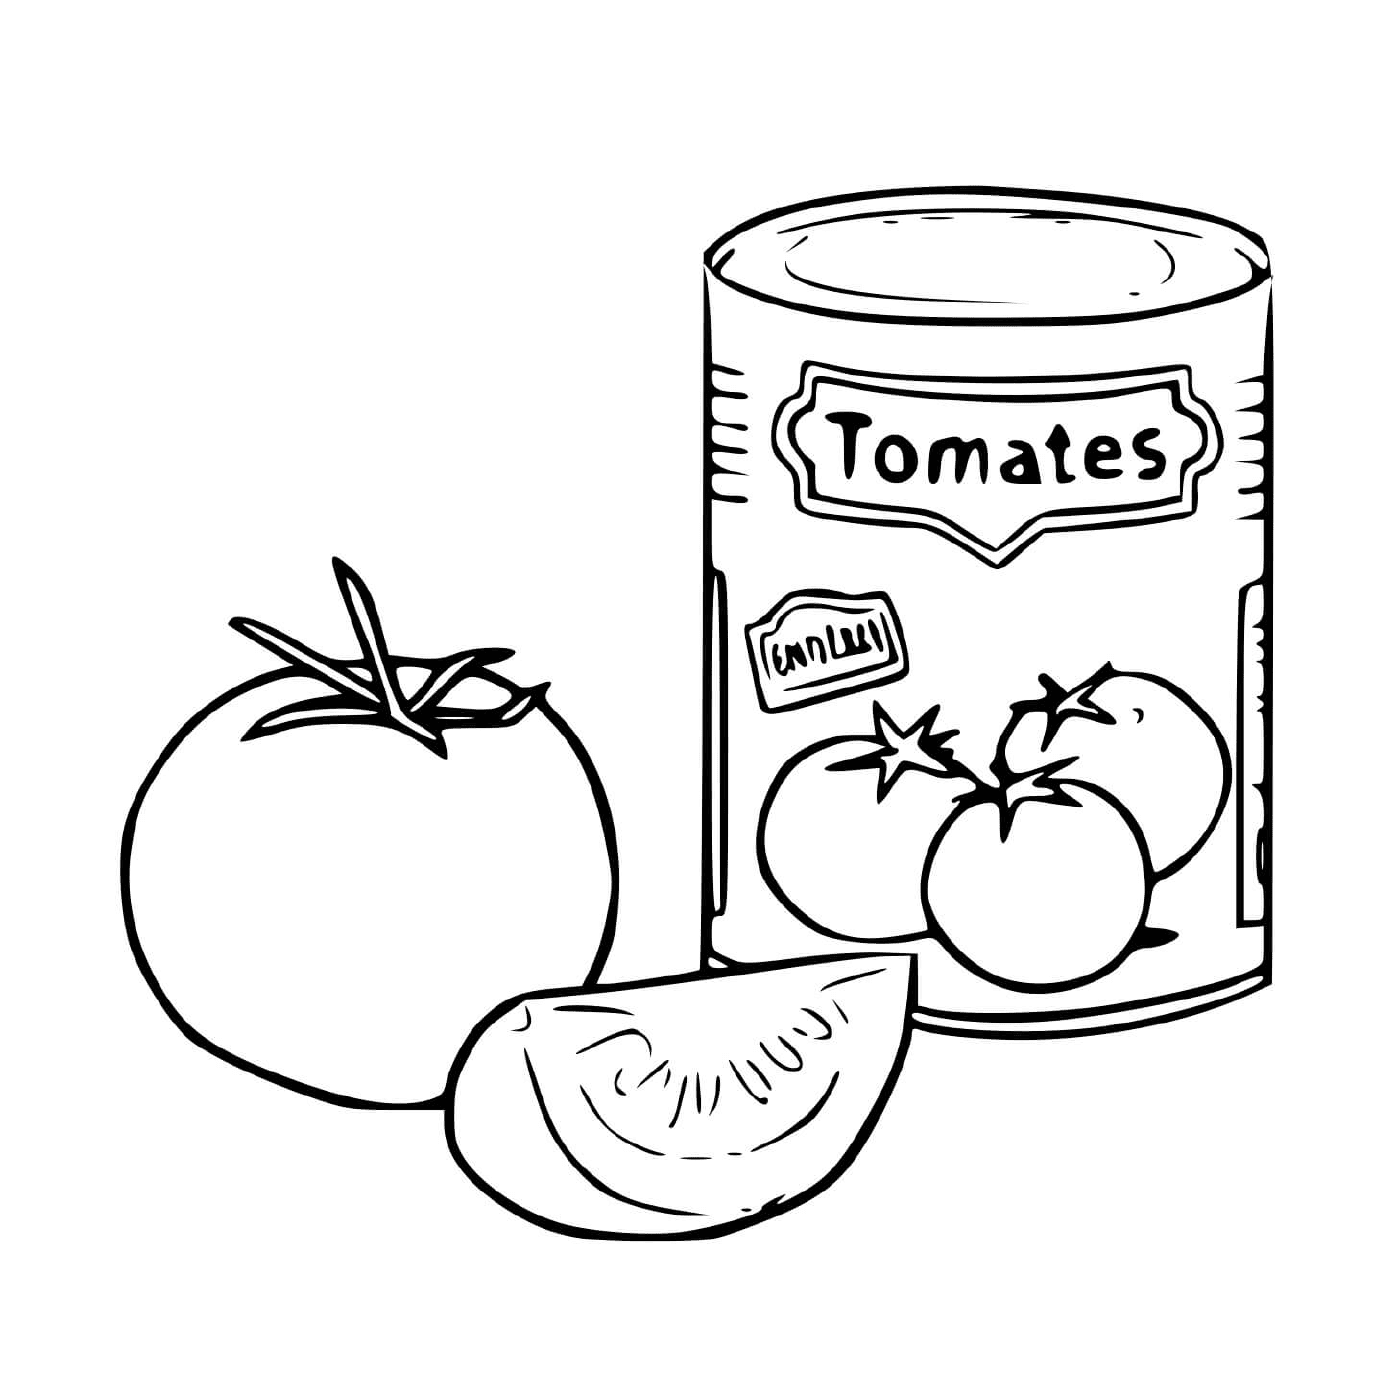   Canne de tomate broyée 